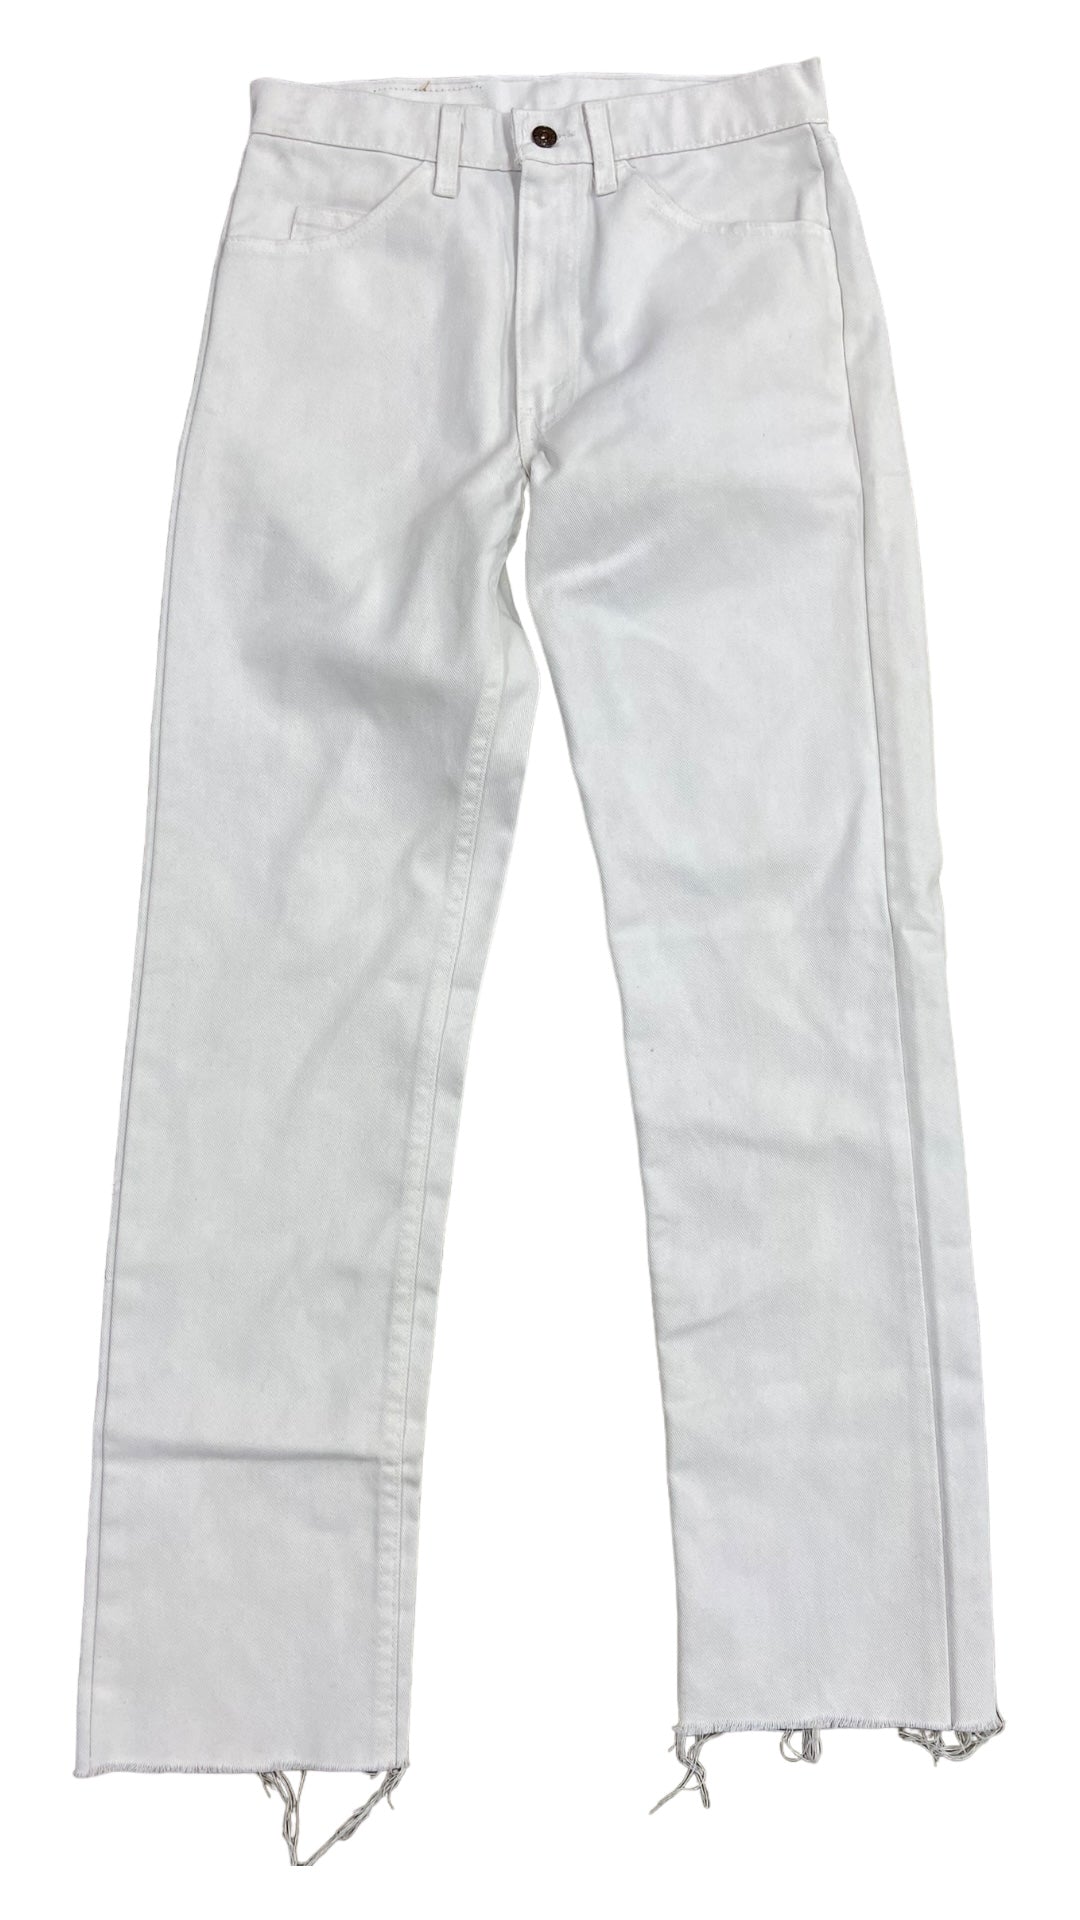 Vtg Levi's White Tab White Jeans Sz 30x34